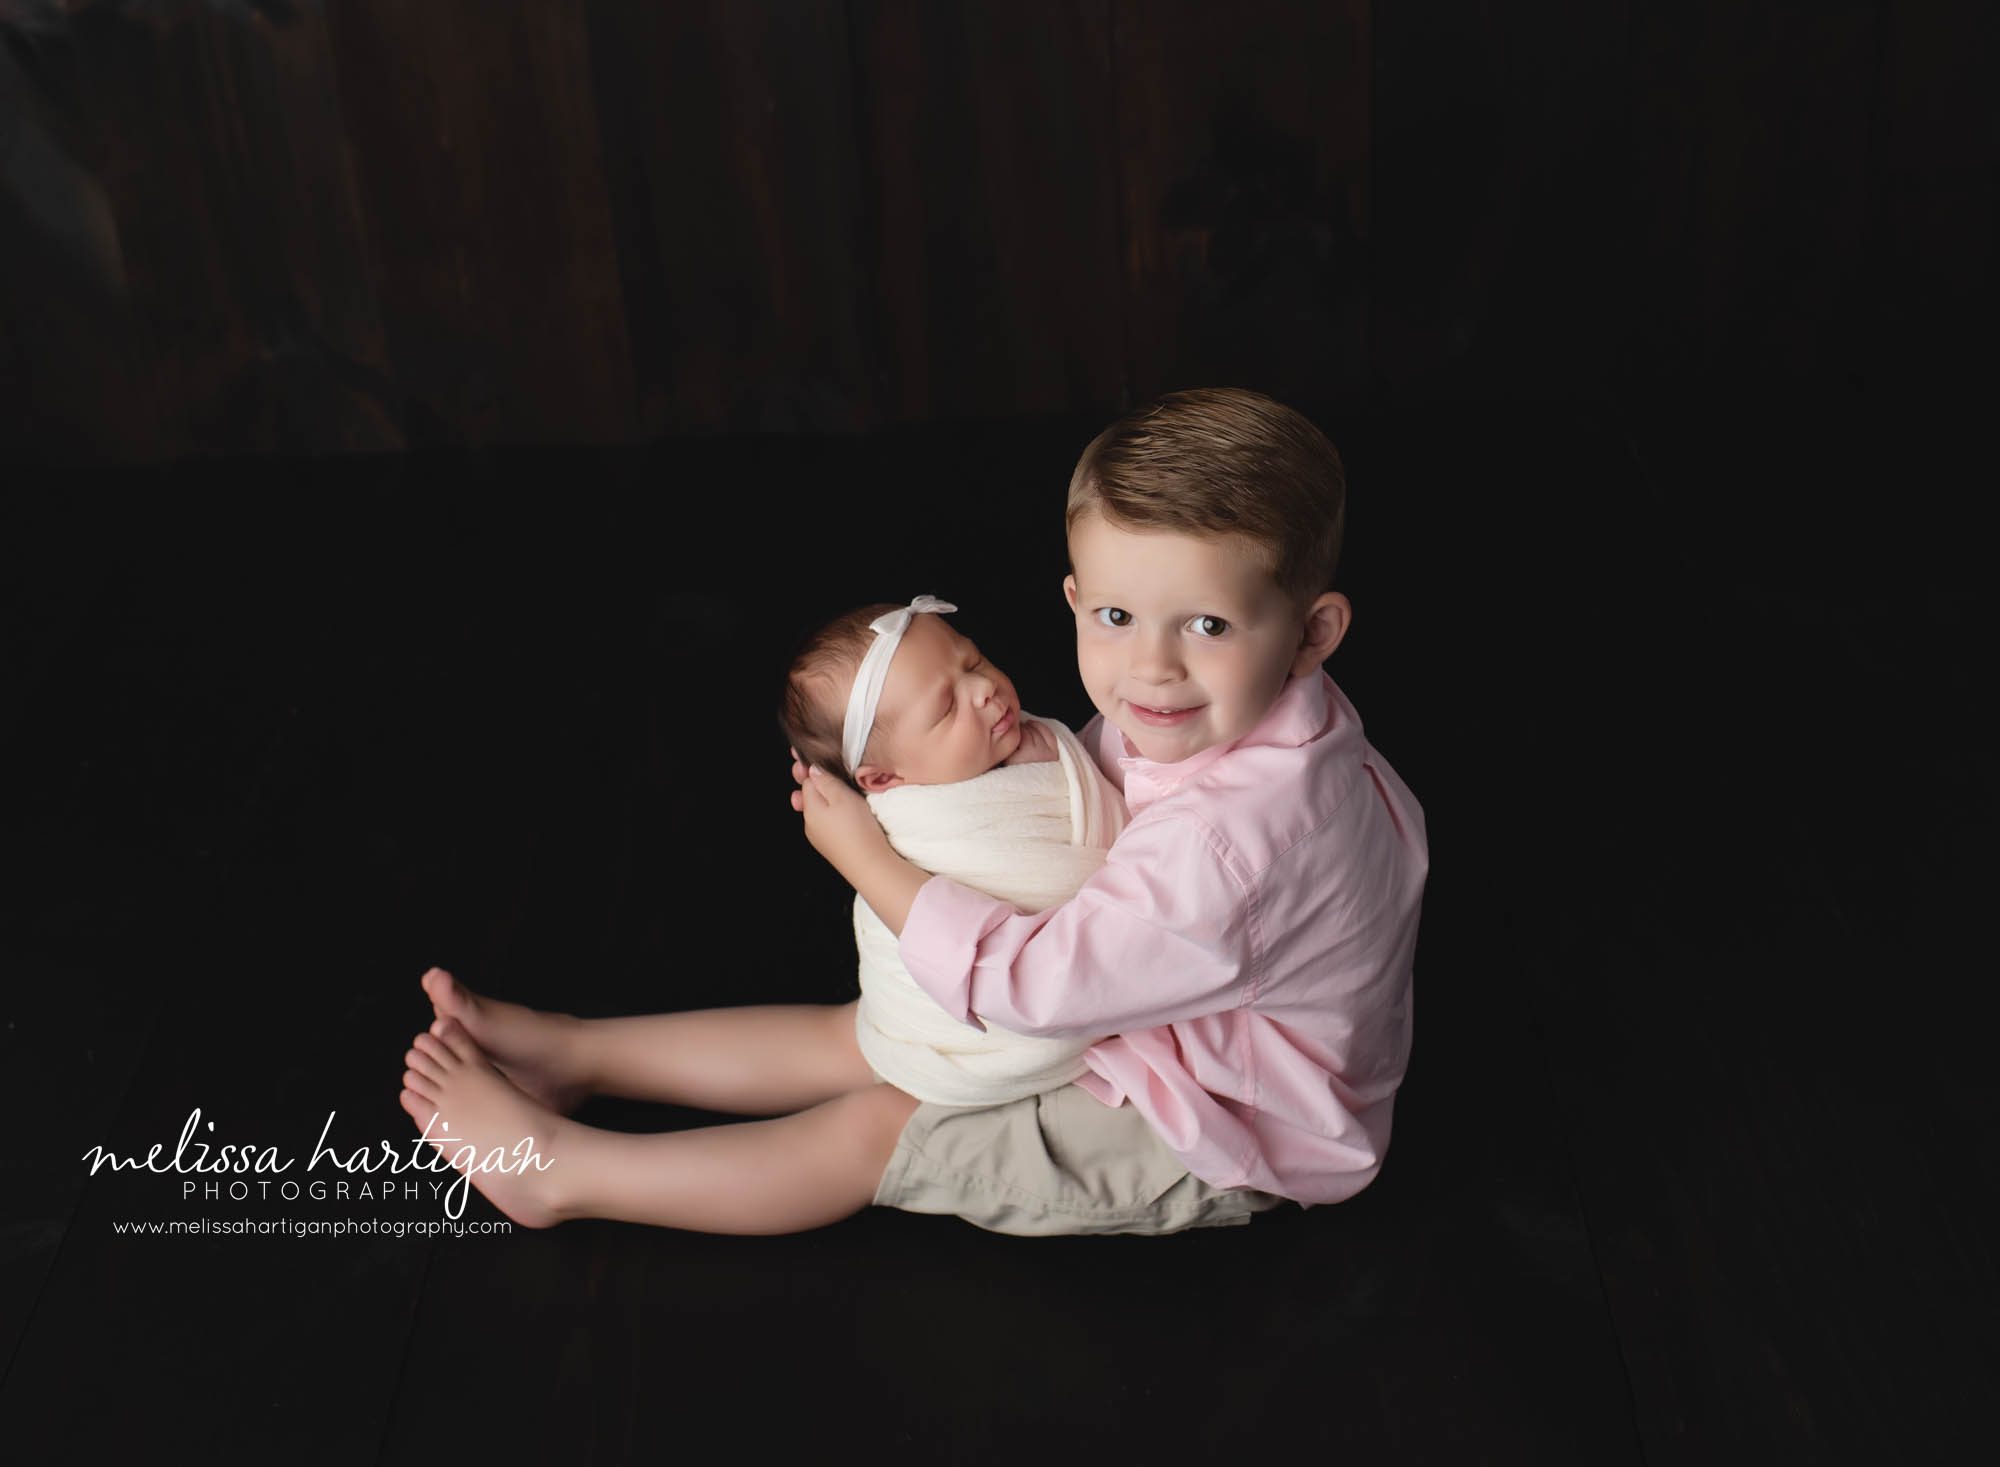 big brother holding newborn baby sister in studio newborn photography session CT newborn Photographer